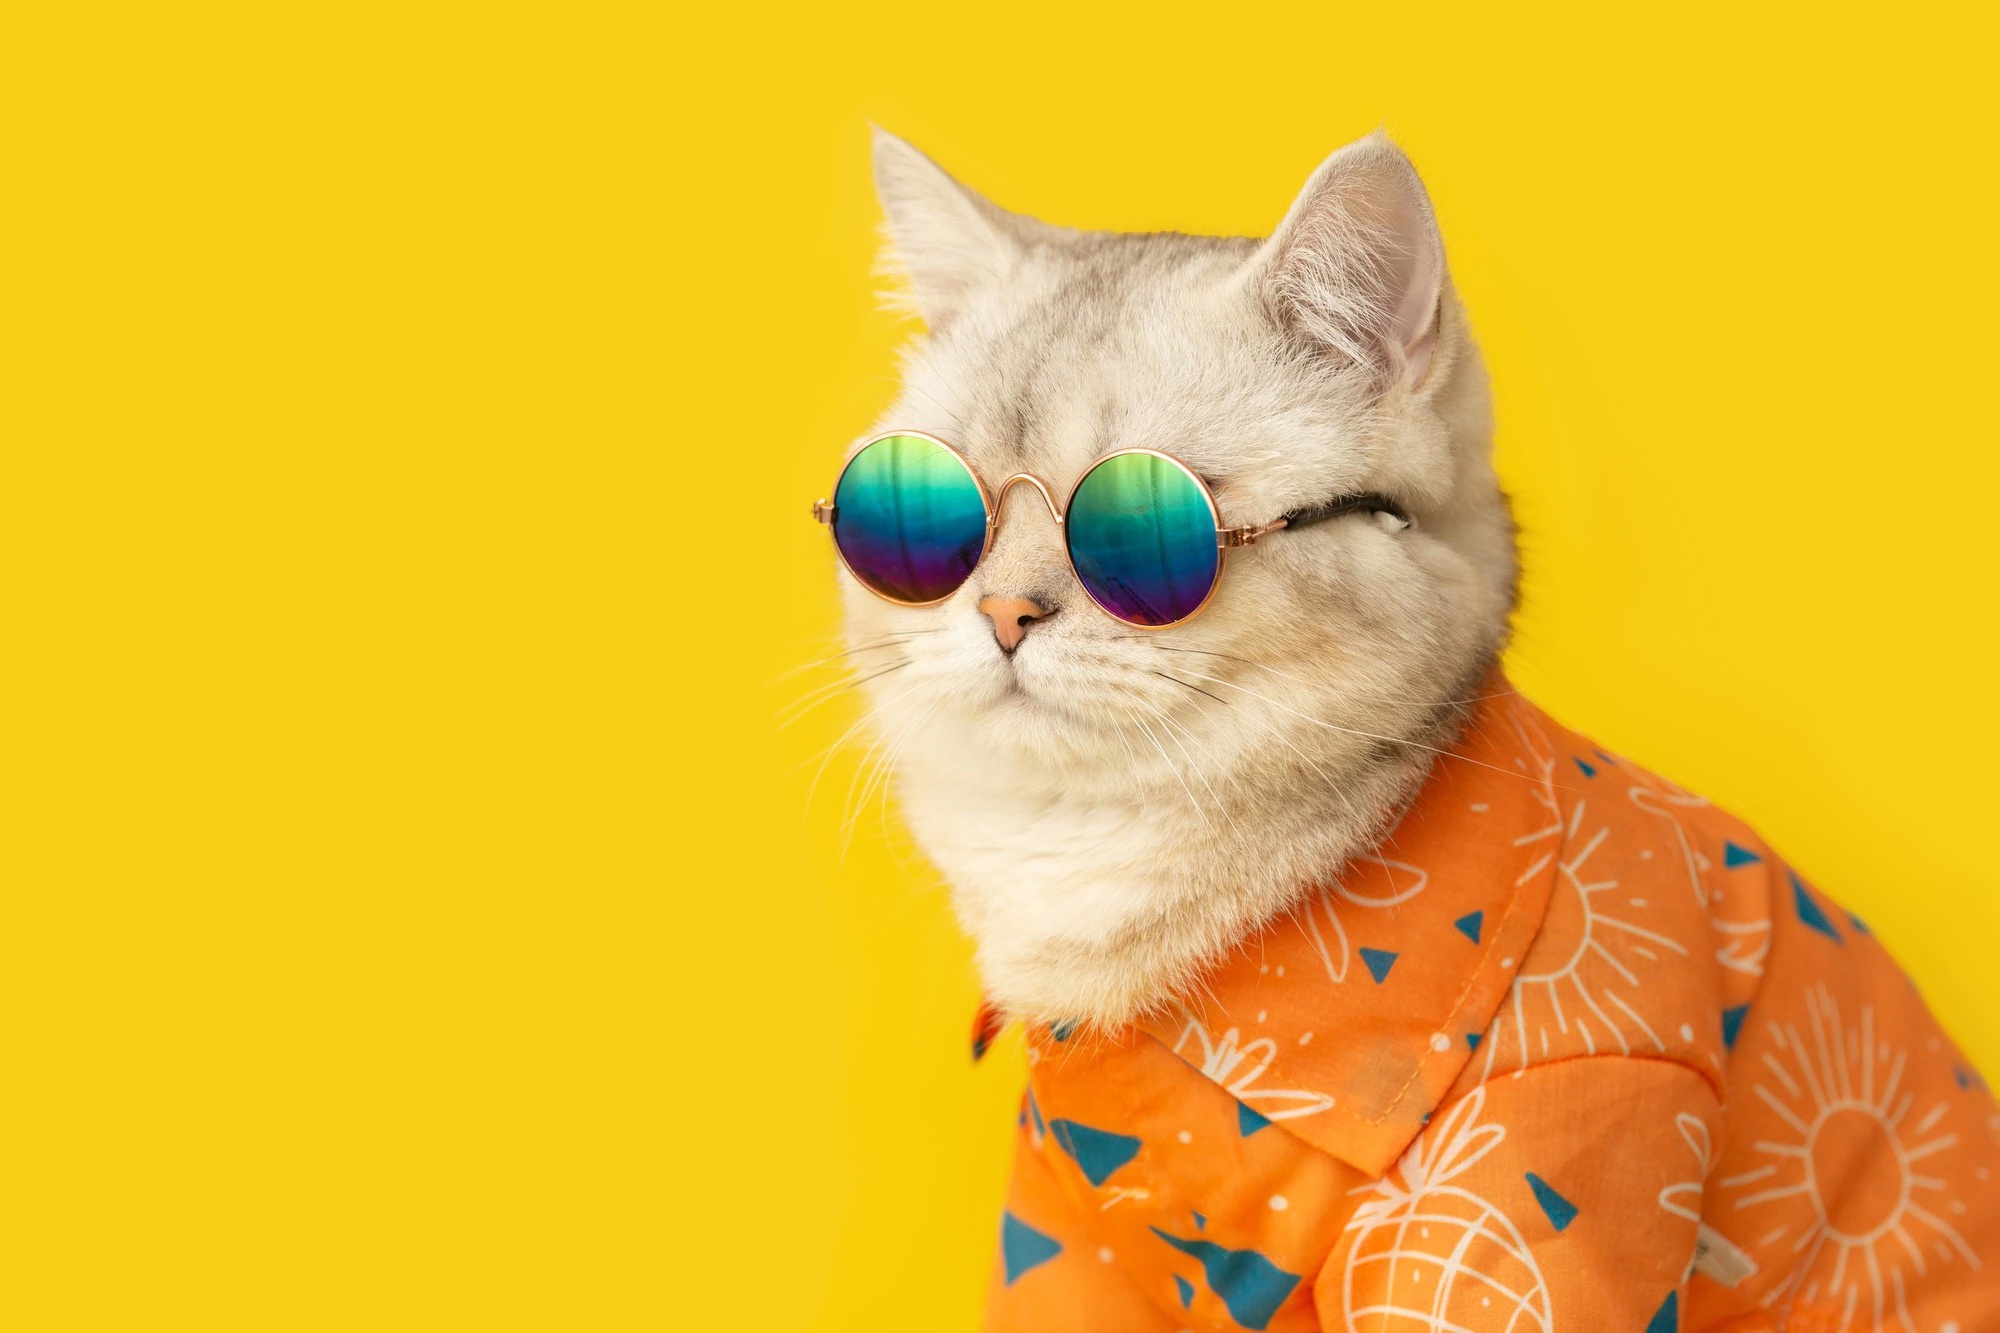 A cat wearing sunglasses and an orange shirt. - Cat